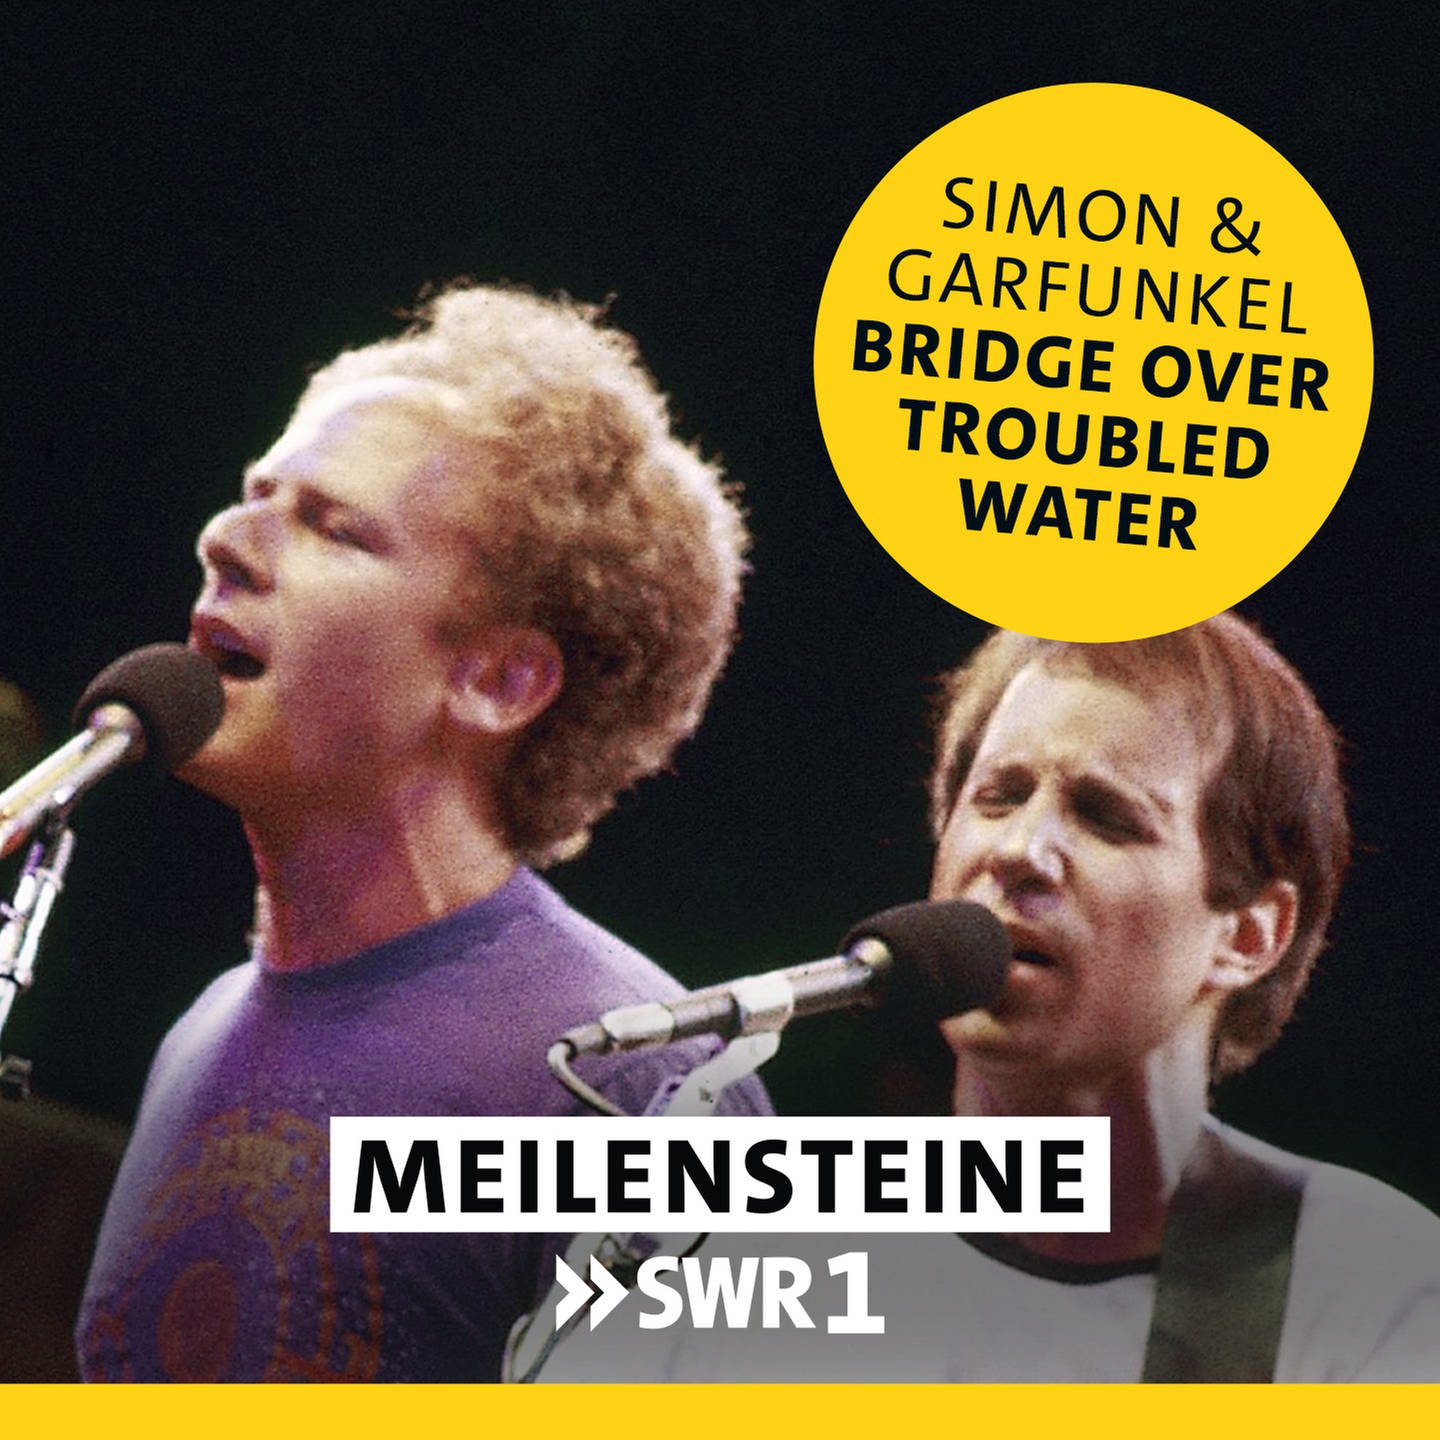 Simon & Garfunkel – "Bridge Over Troubled Water"